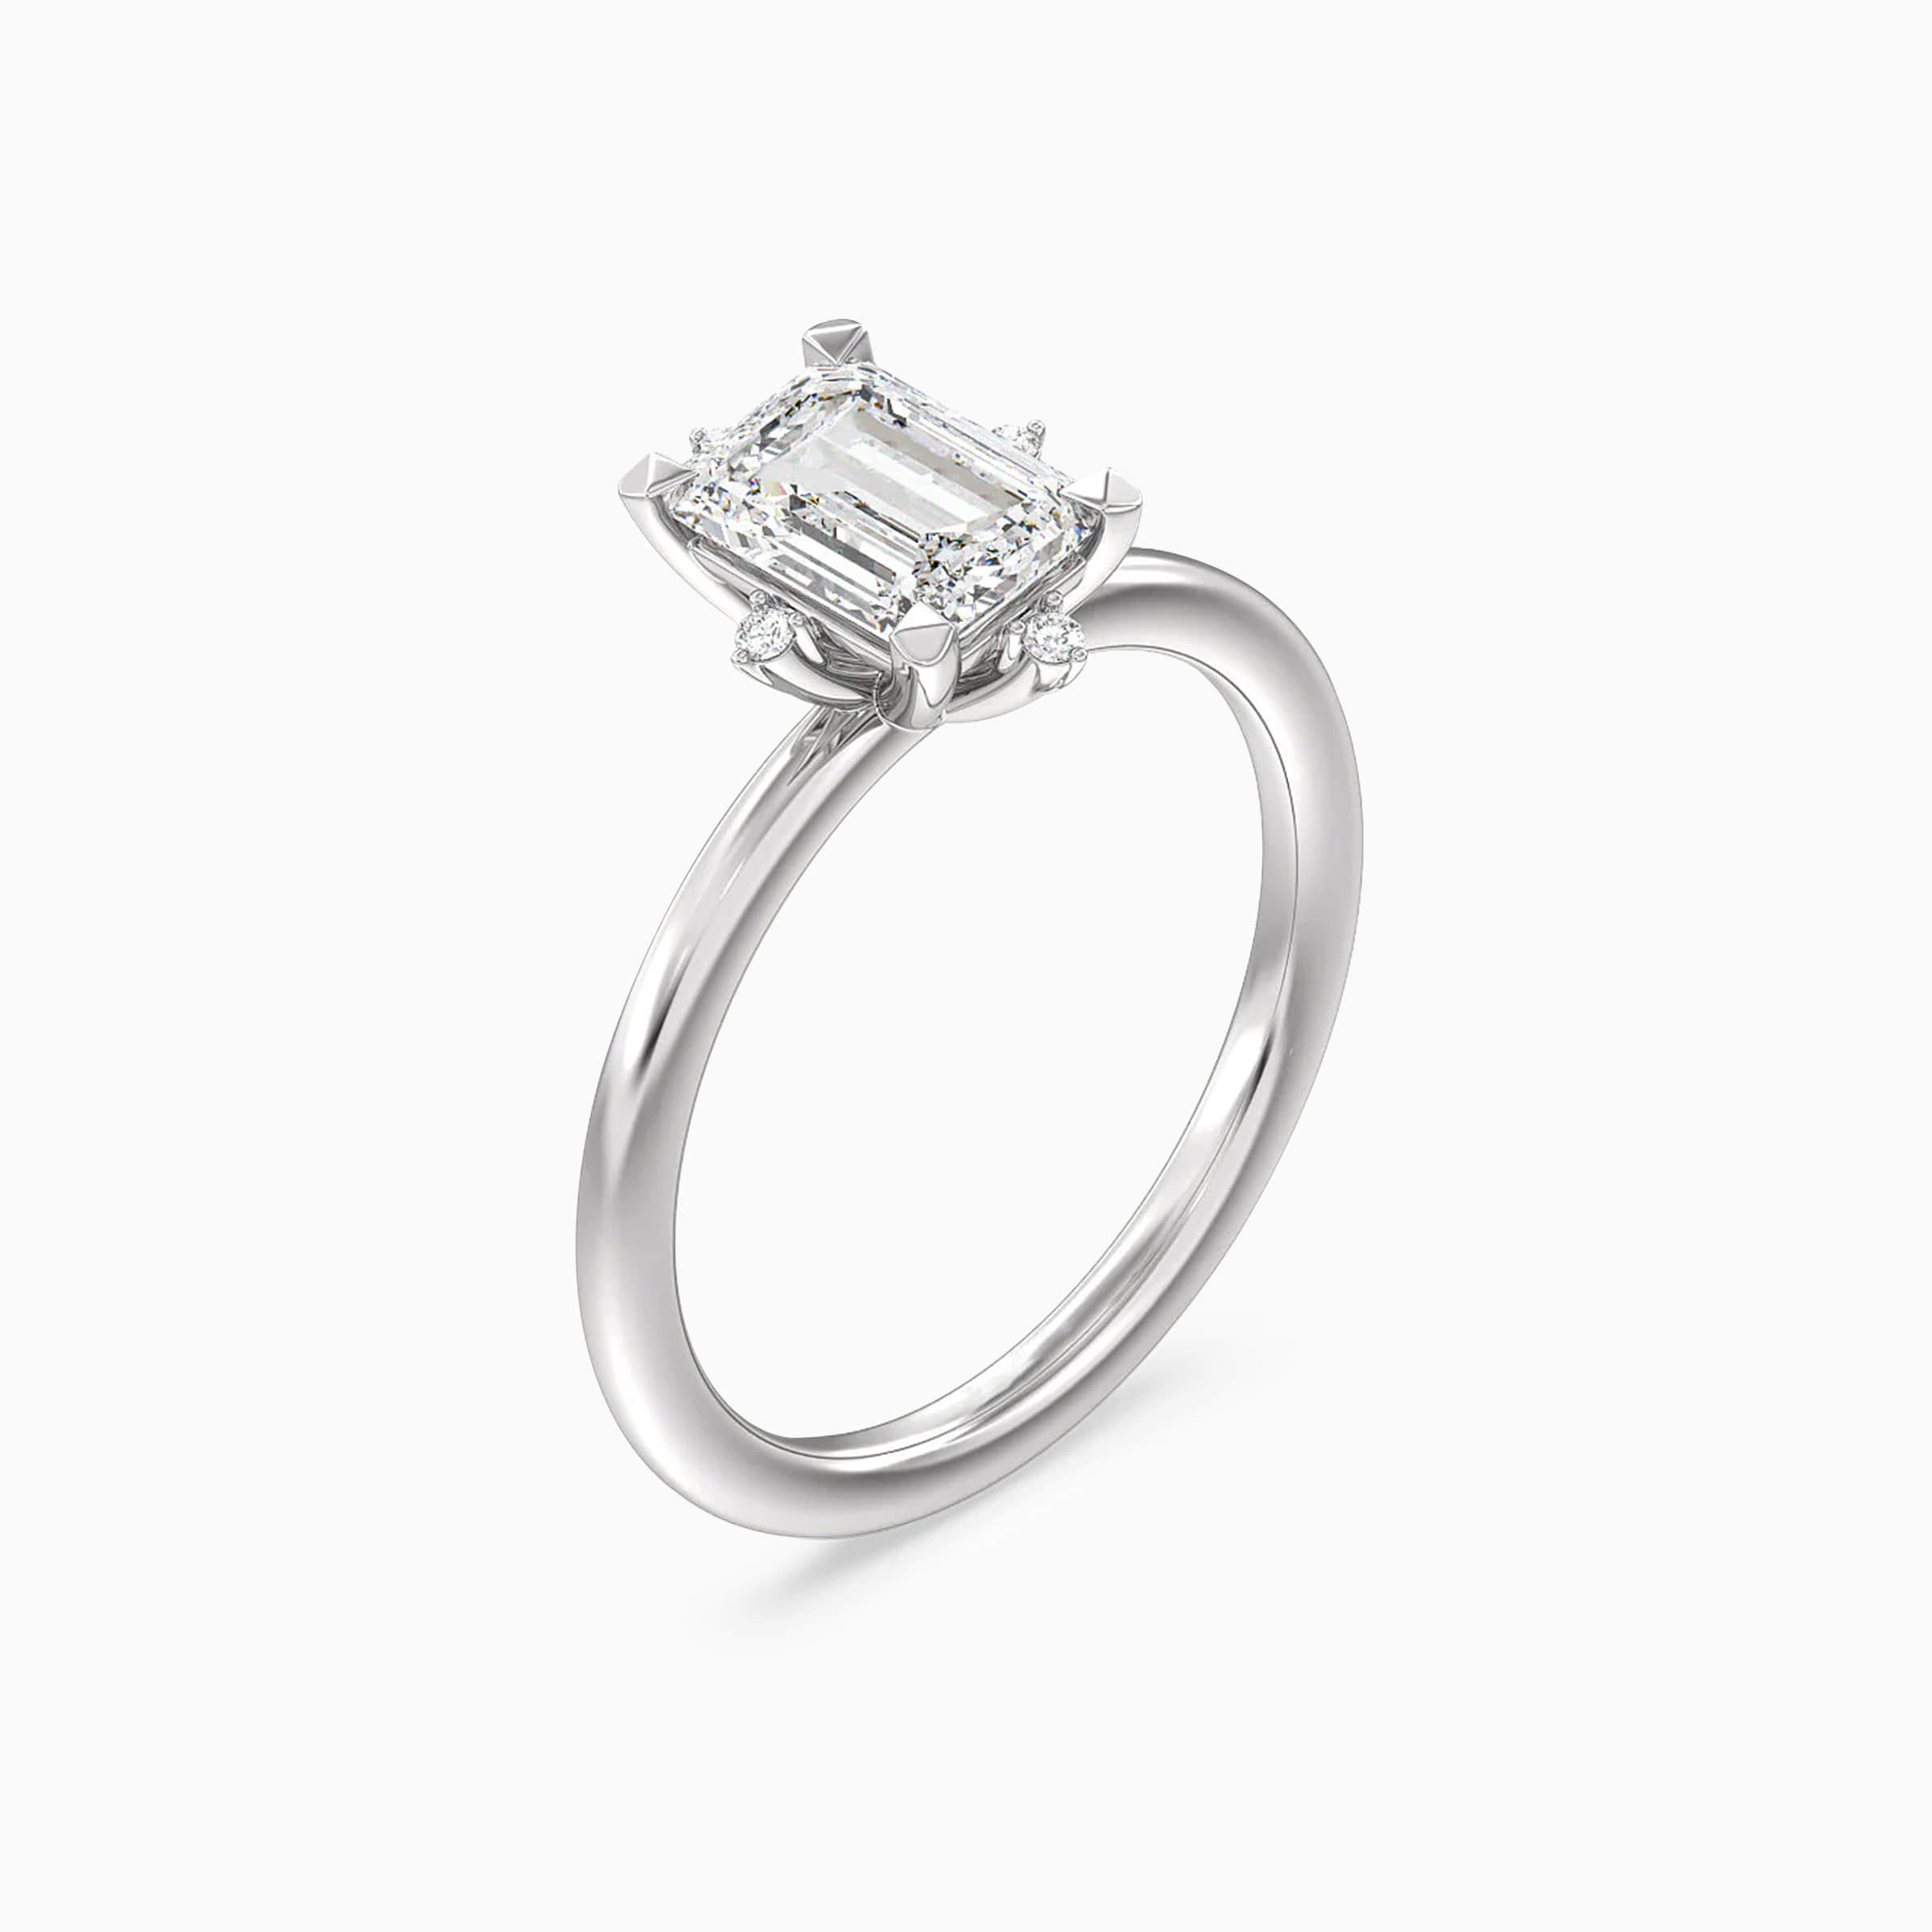 Darry Ring classic emerald cut engagement ring in platinum